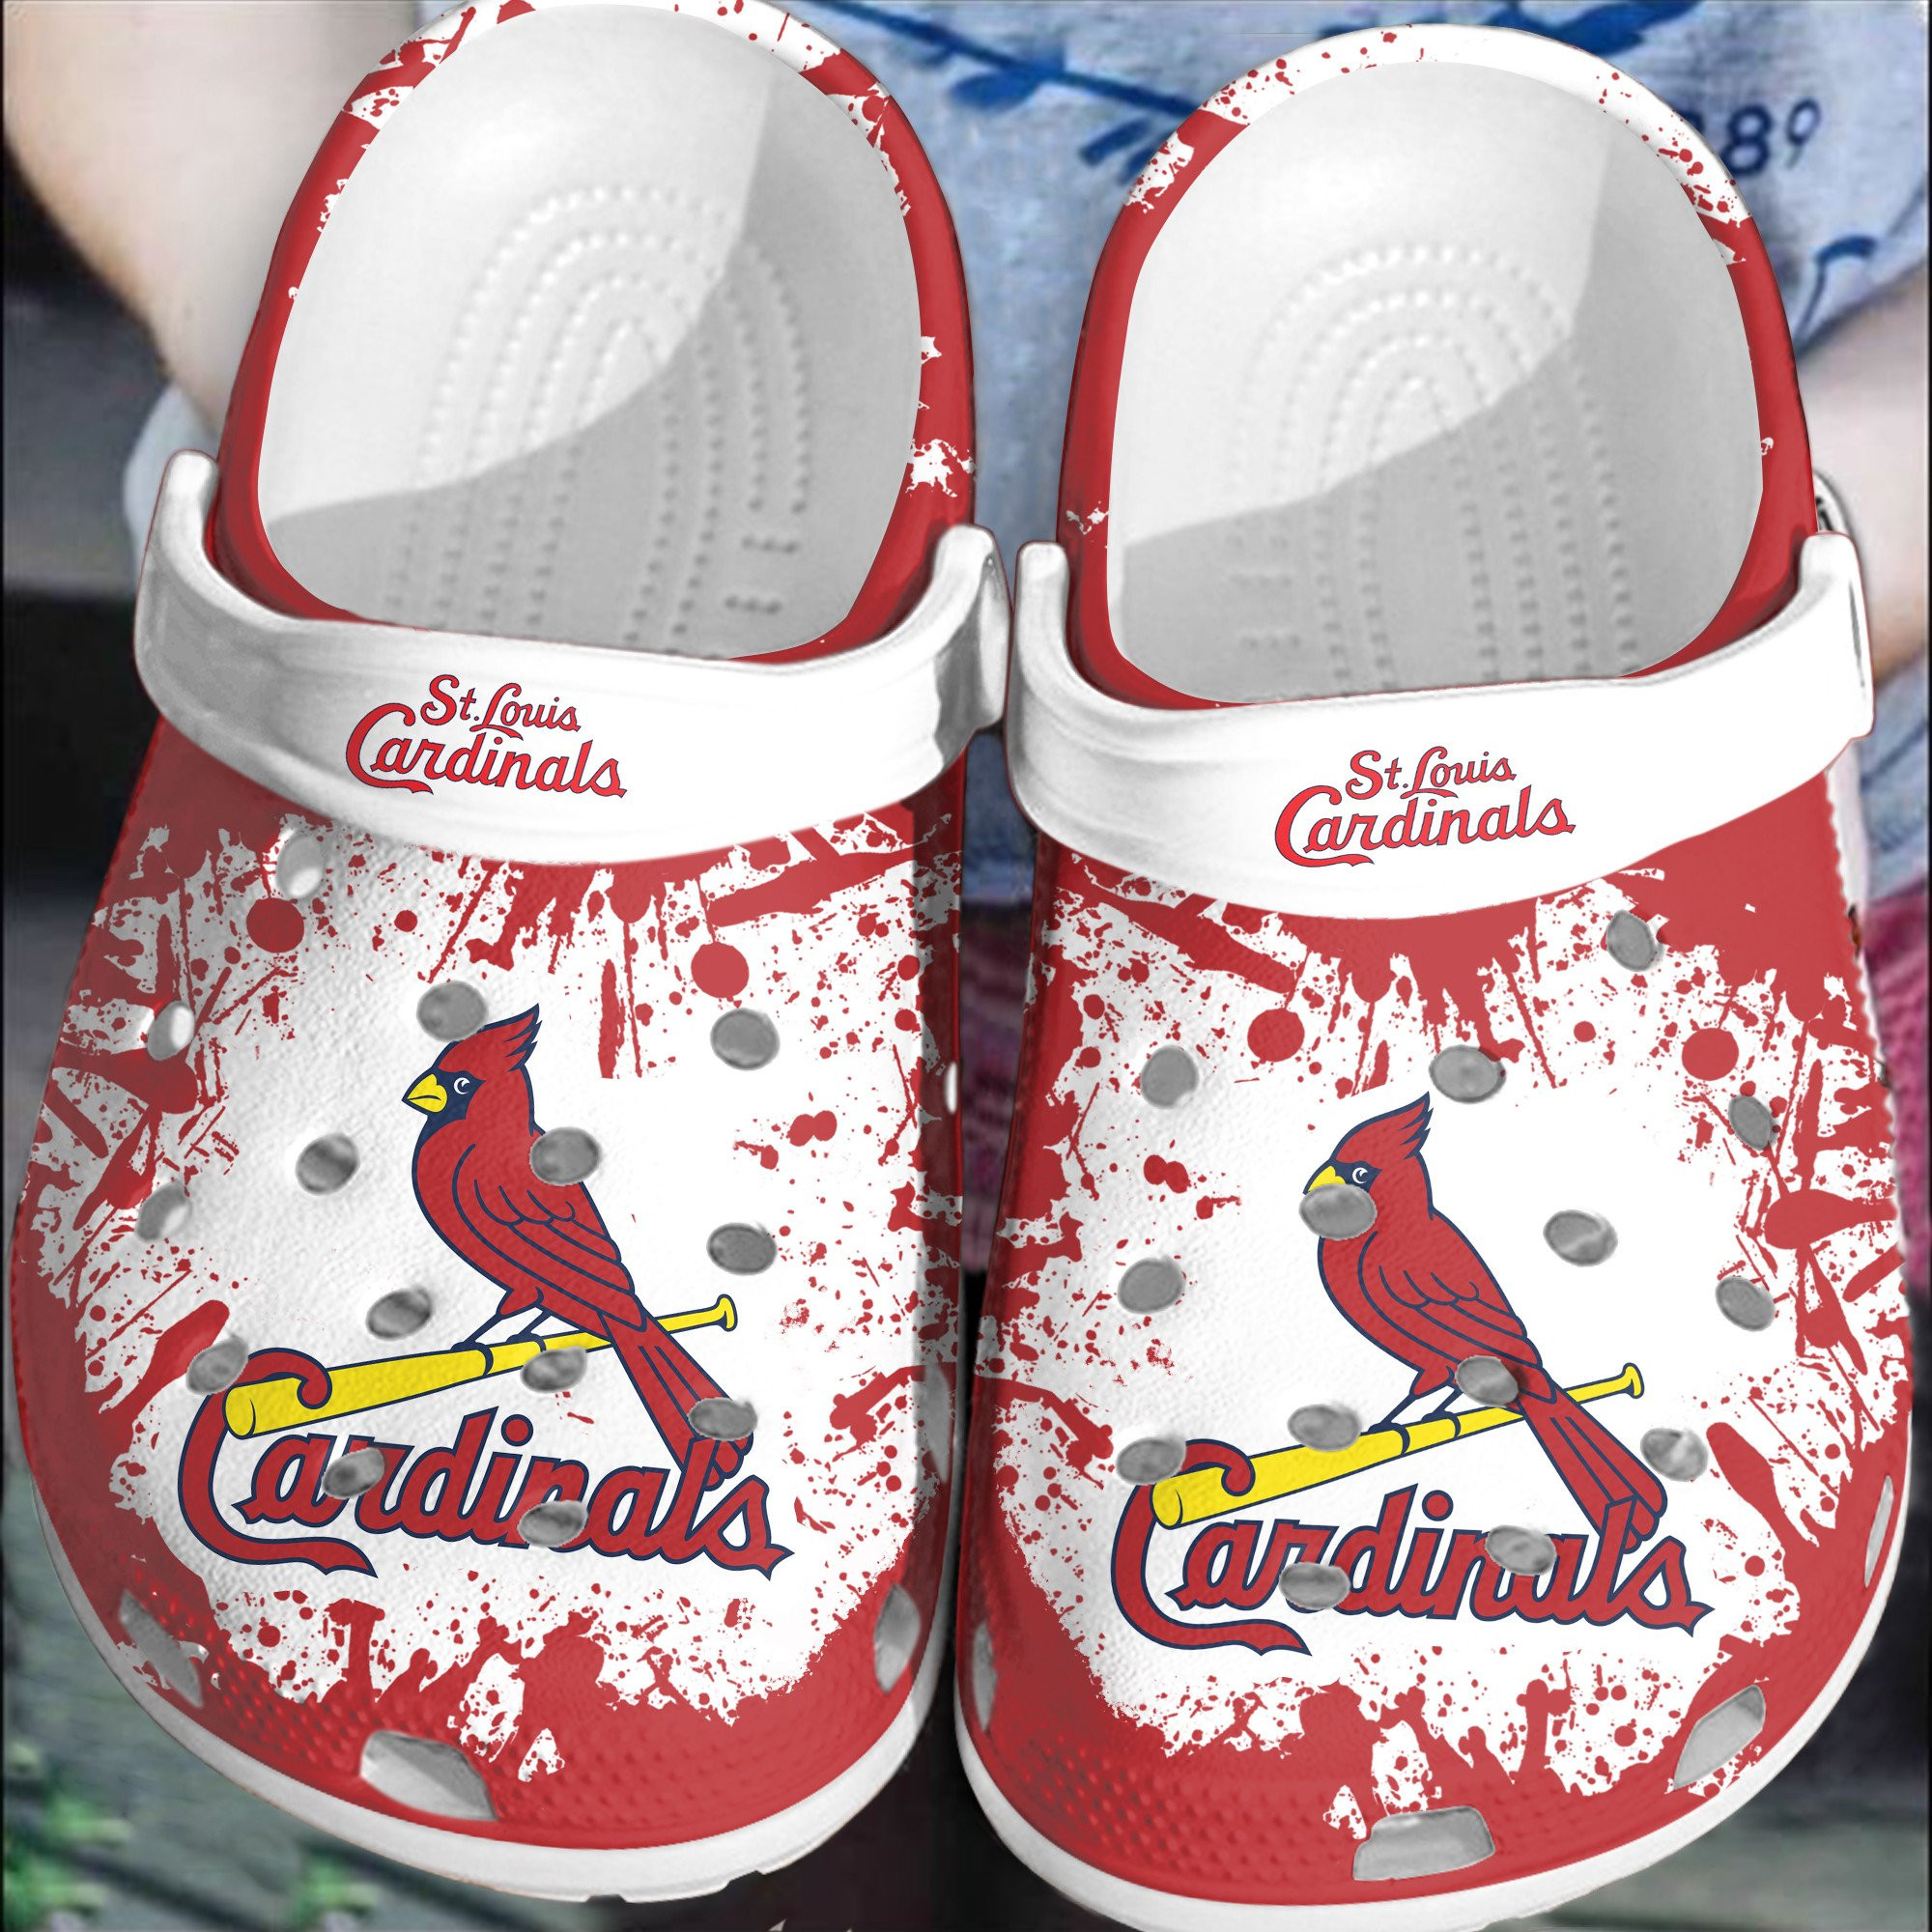 Mlb Team St Louis Cardinals Red-White Crocs Clog Shoesshoes